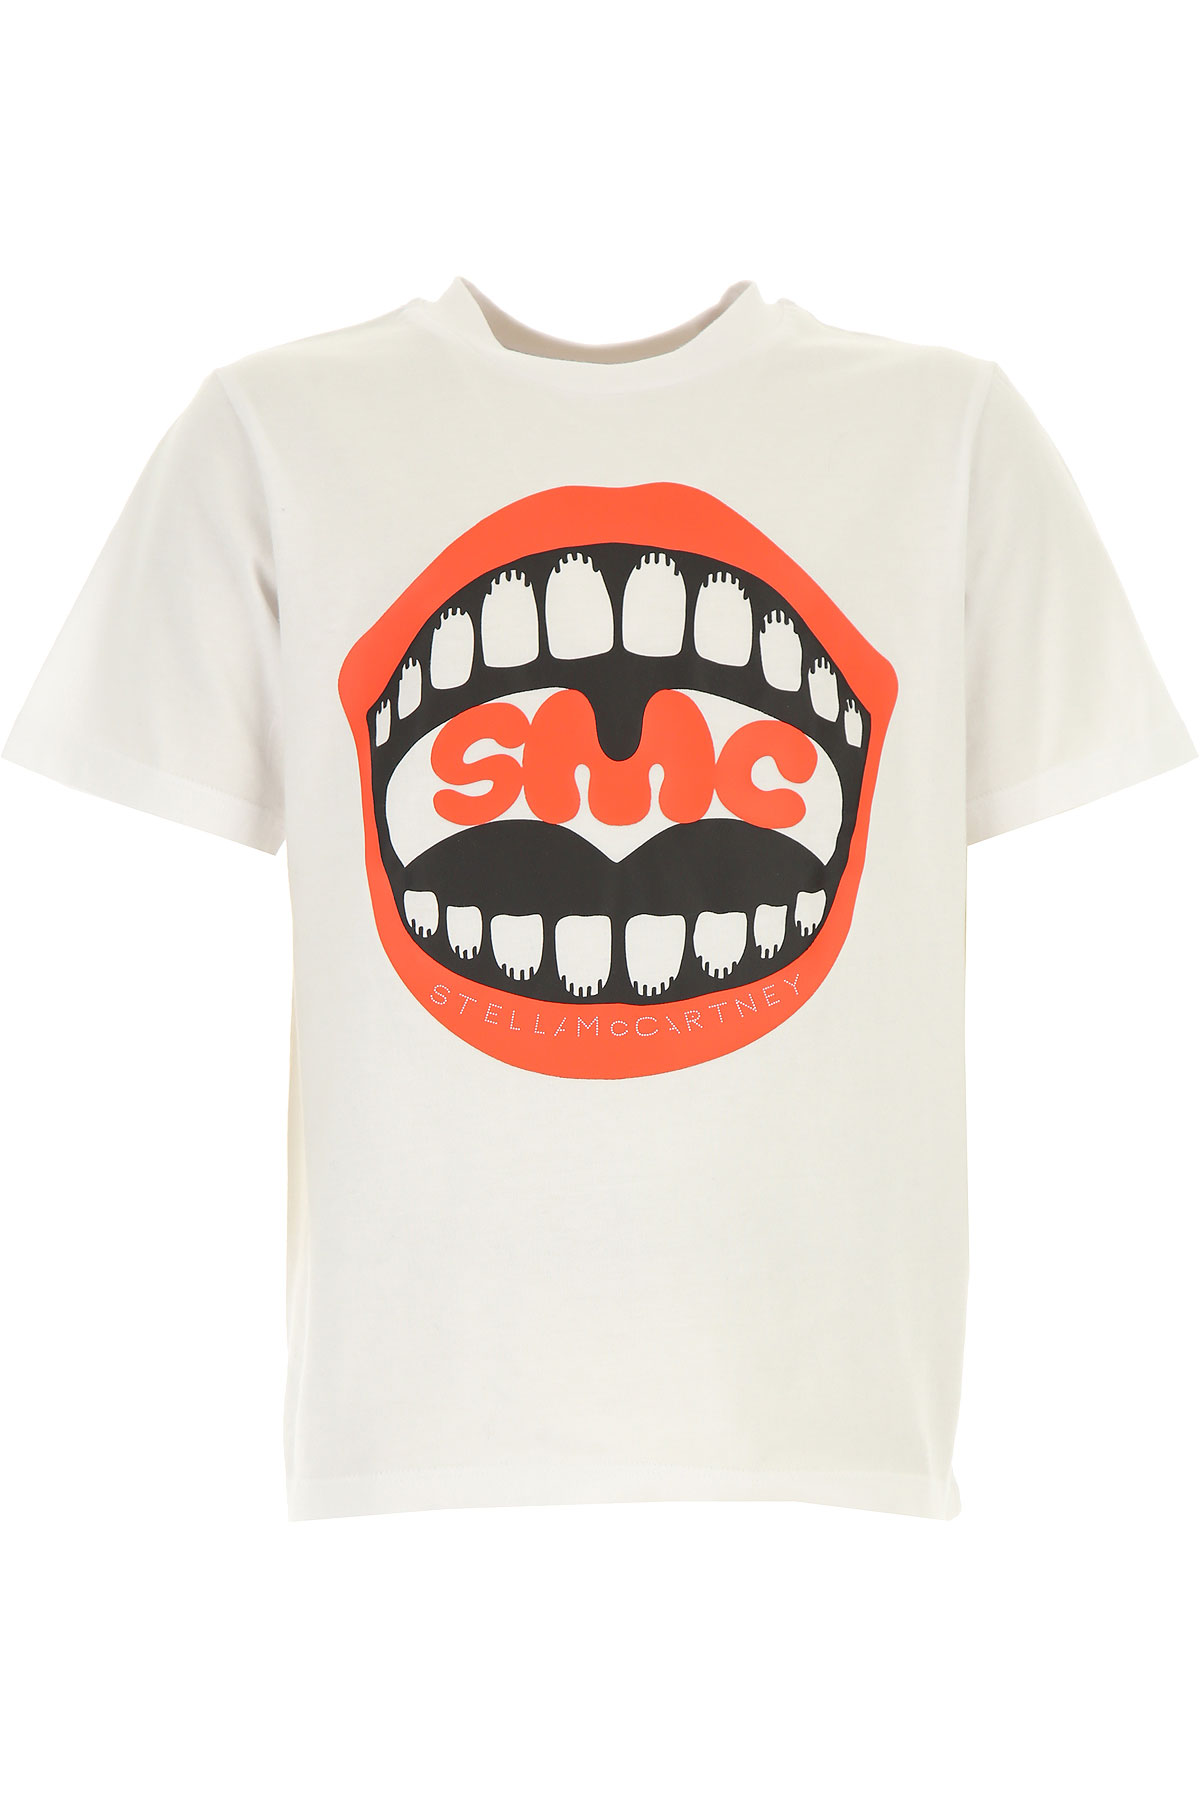 Stella McCartney Kinder T-Shirt für Jungen Günstig im Sale, Weiss, Baumwolle, 2017, 10Y 12Y 4Y 6Y 8Y